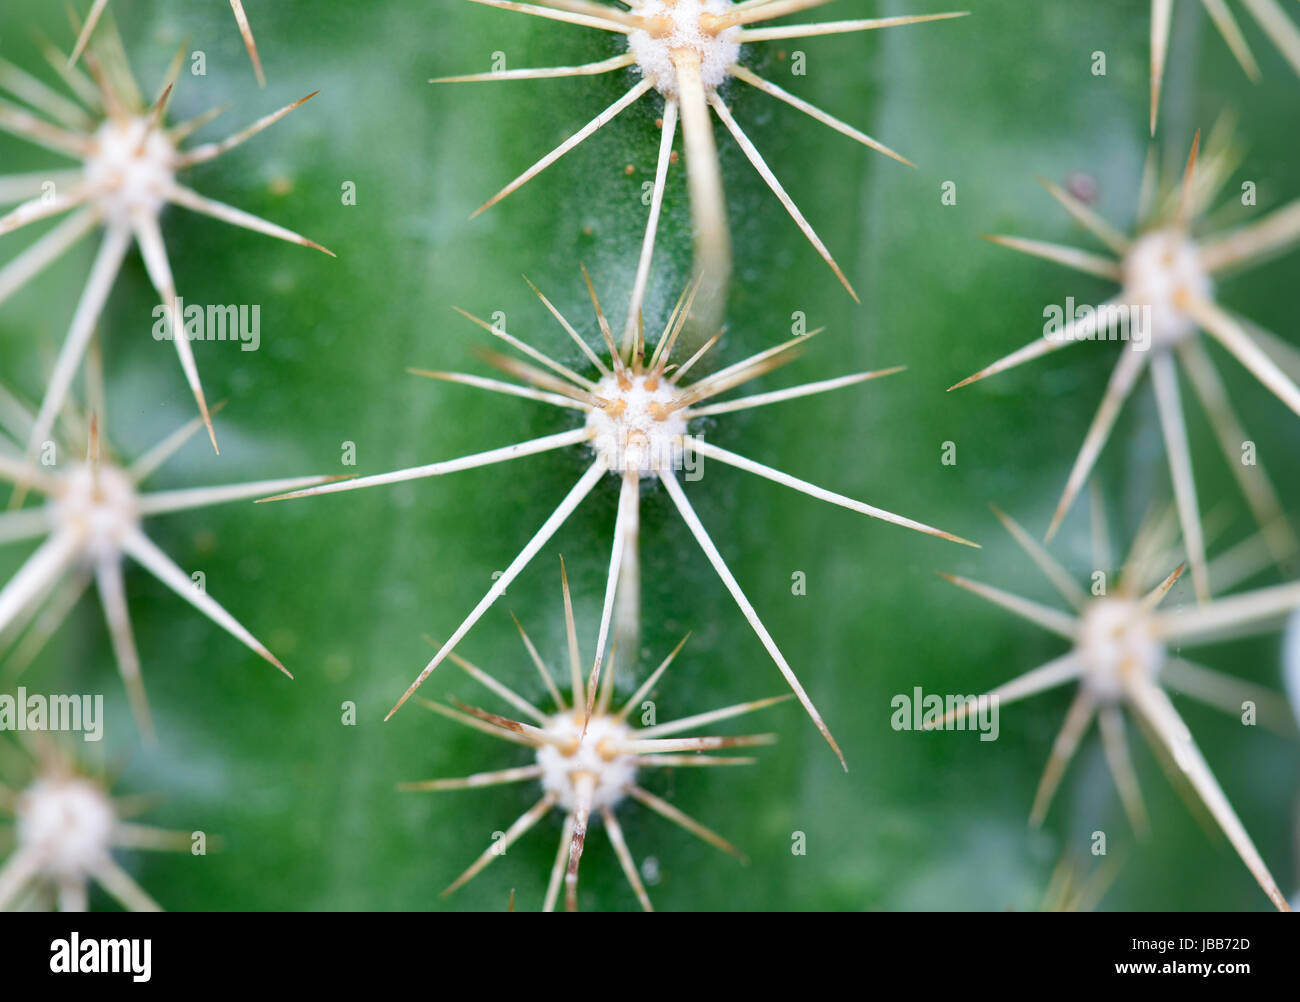 A close up photo of nice specimen of cactus Stock Photo